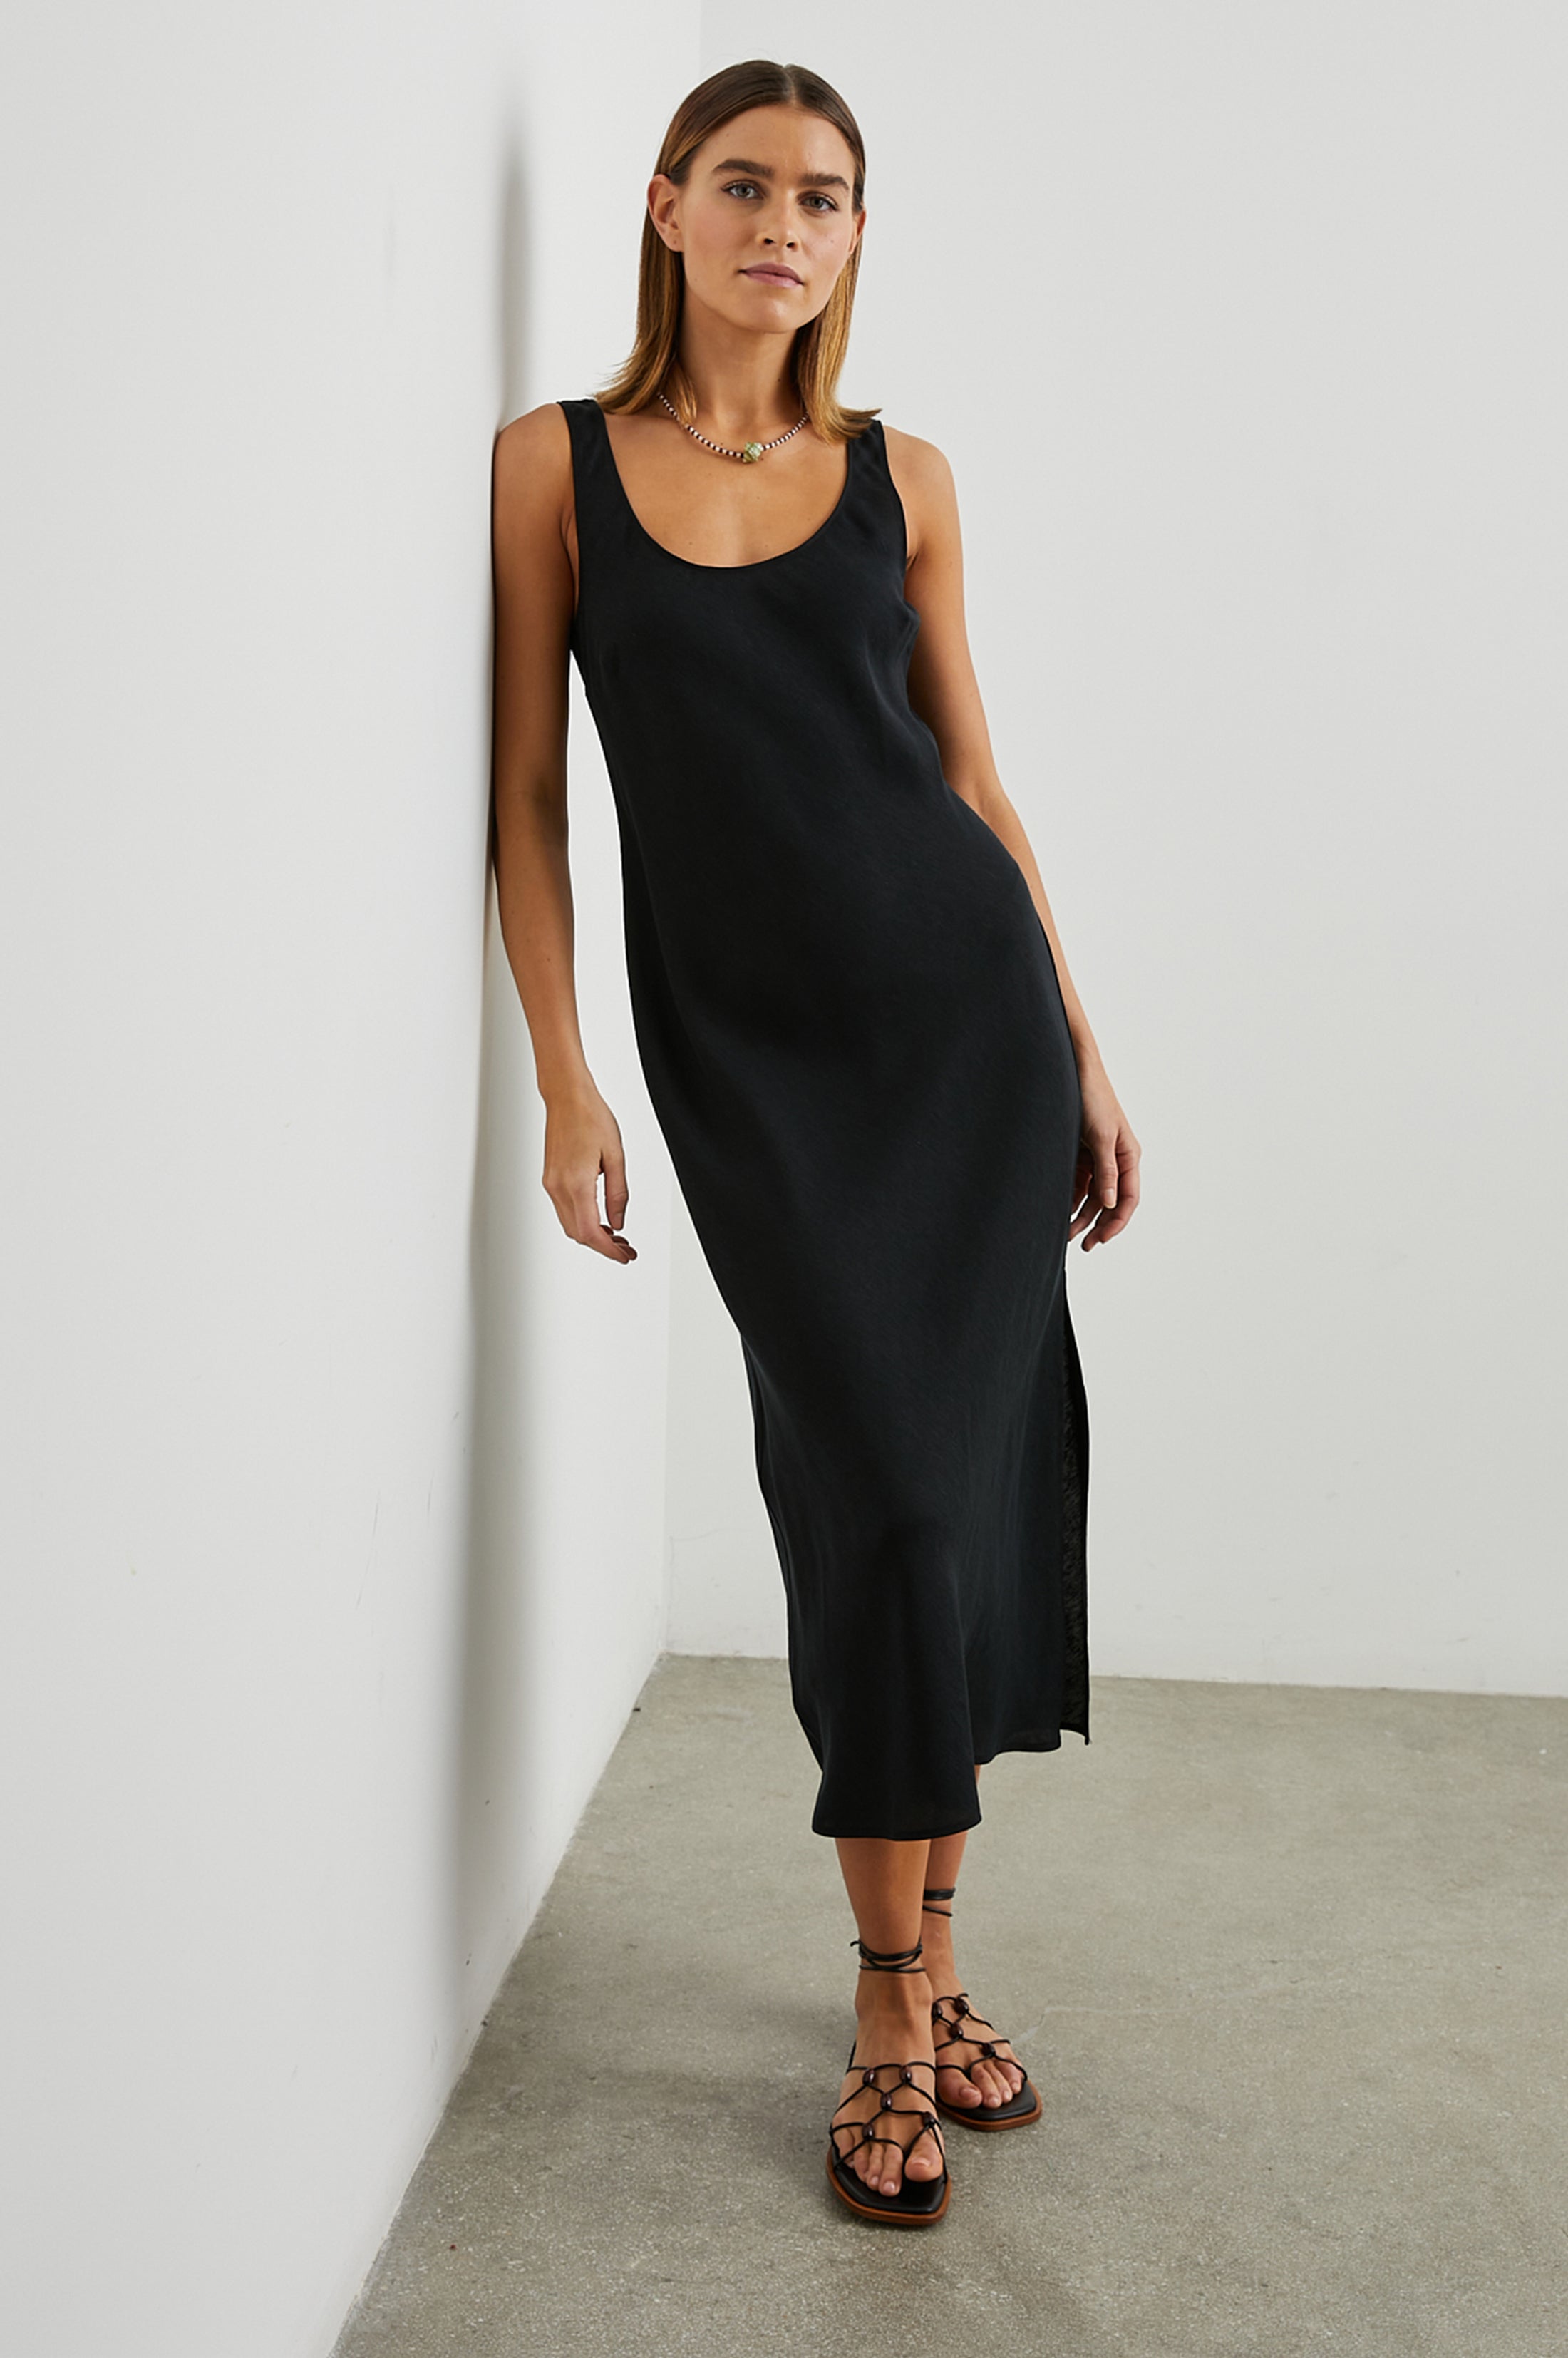 Black sleeveless dress with side split